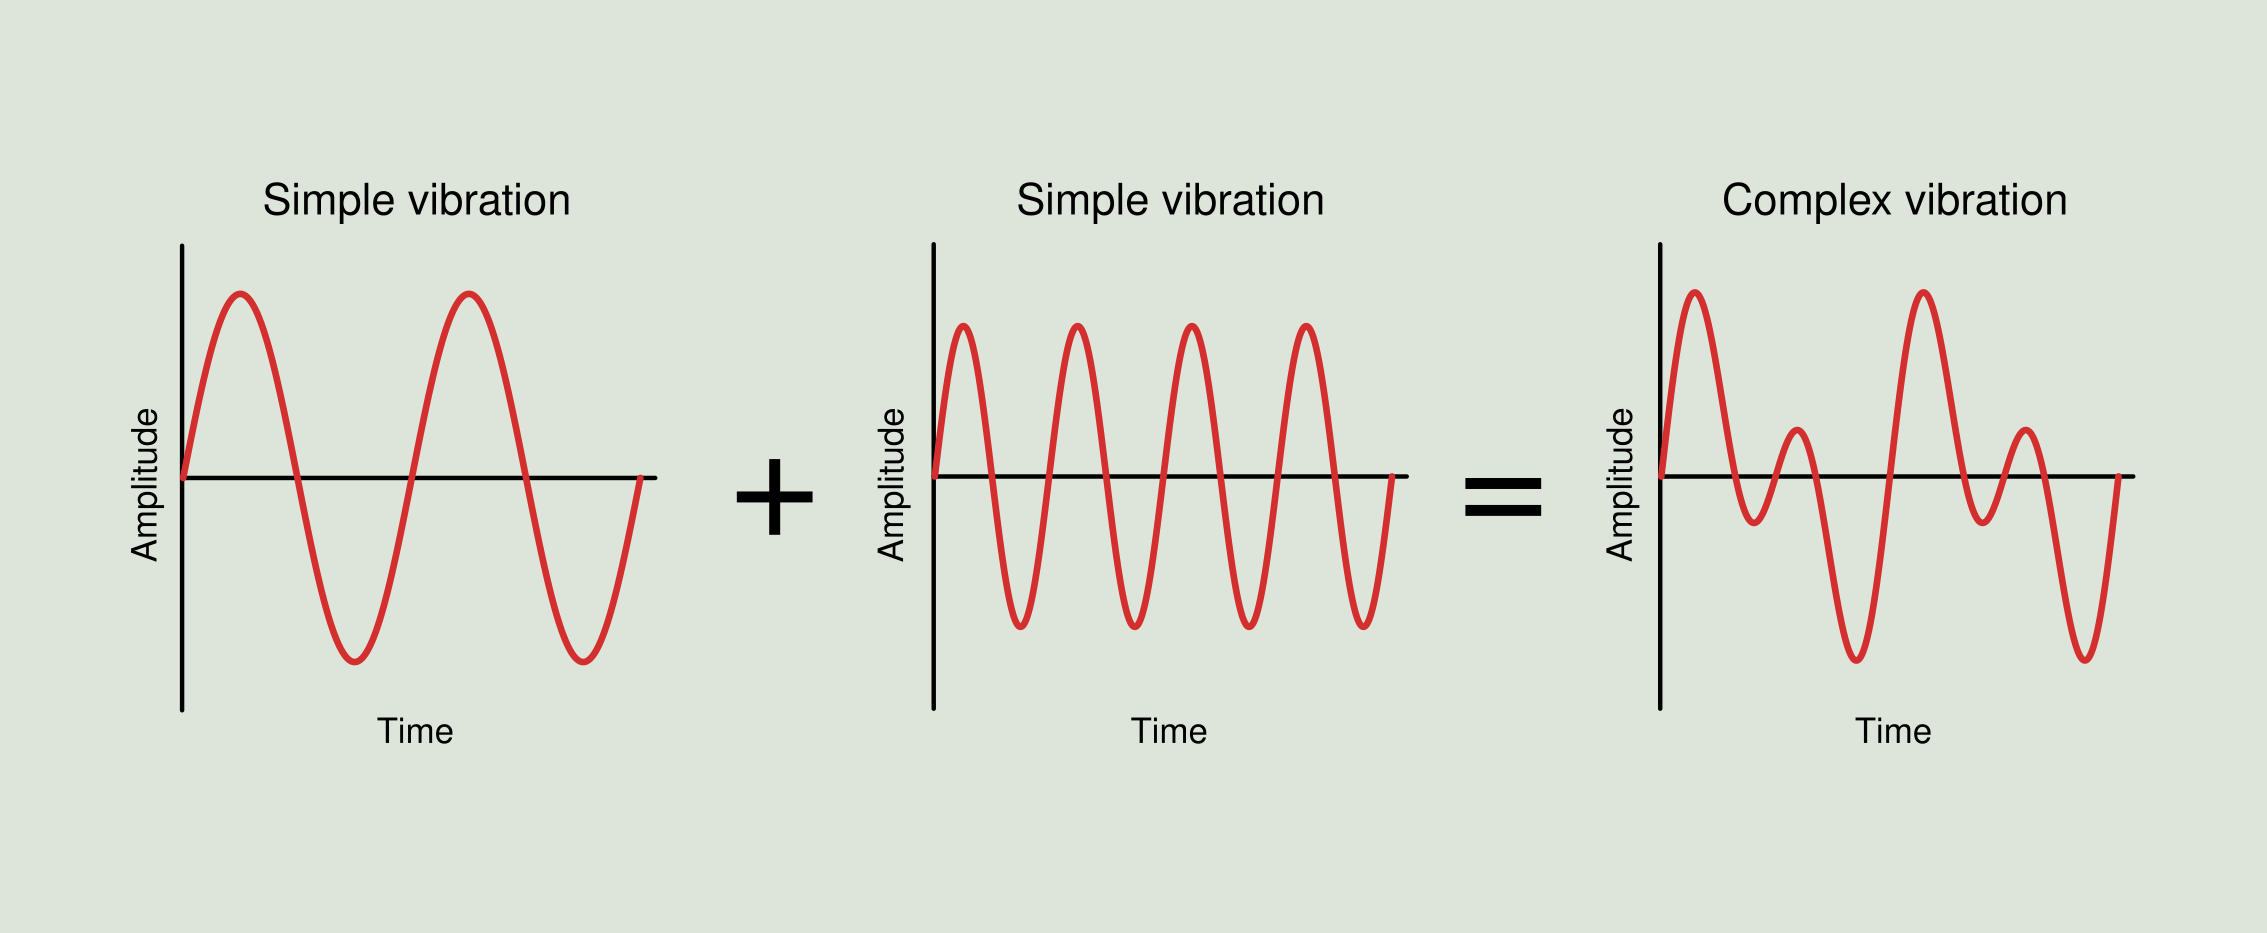 Figure 2.5: Time domain sum of simple vibration